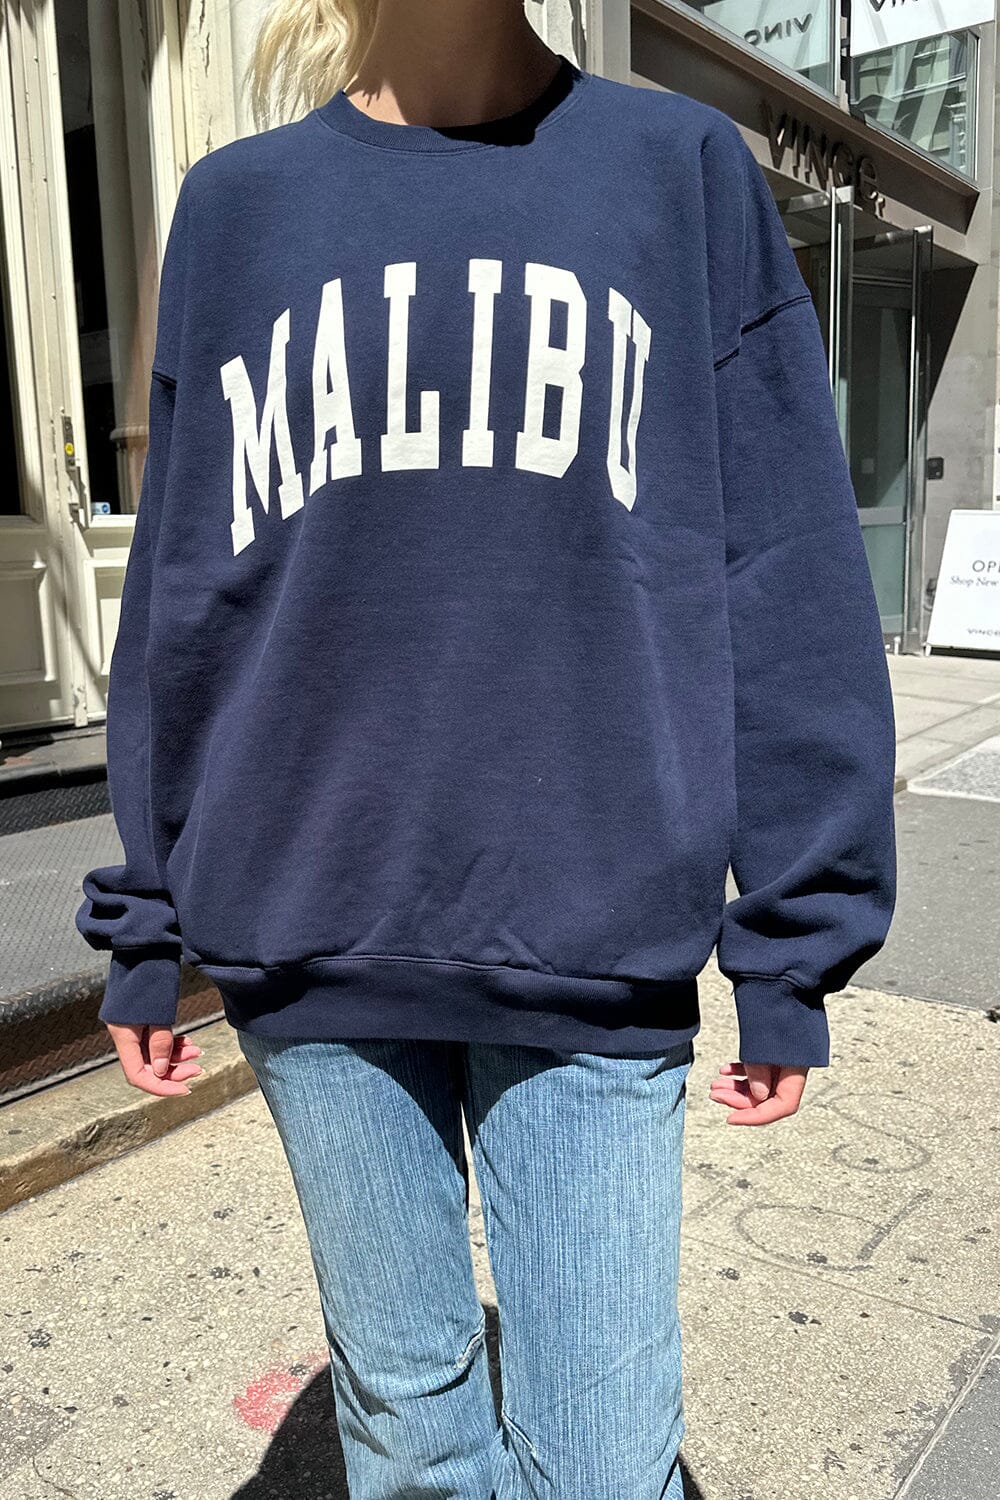 Erica Malibu Sweatshirt – Brandy Melville